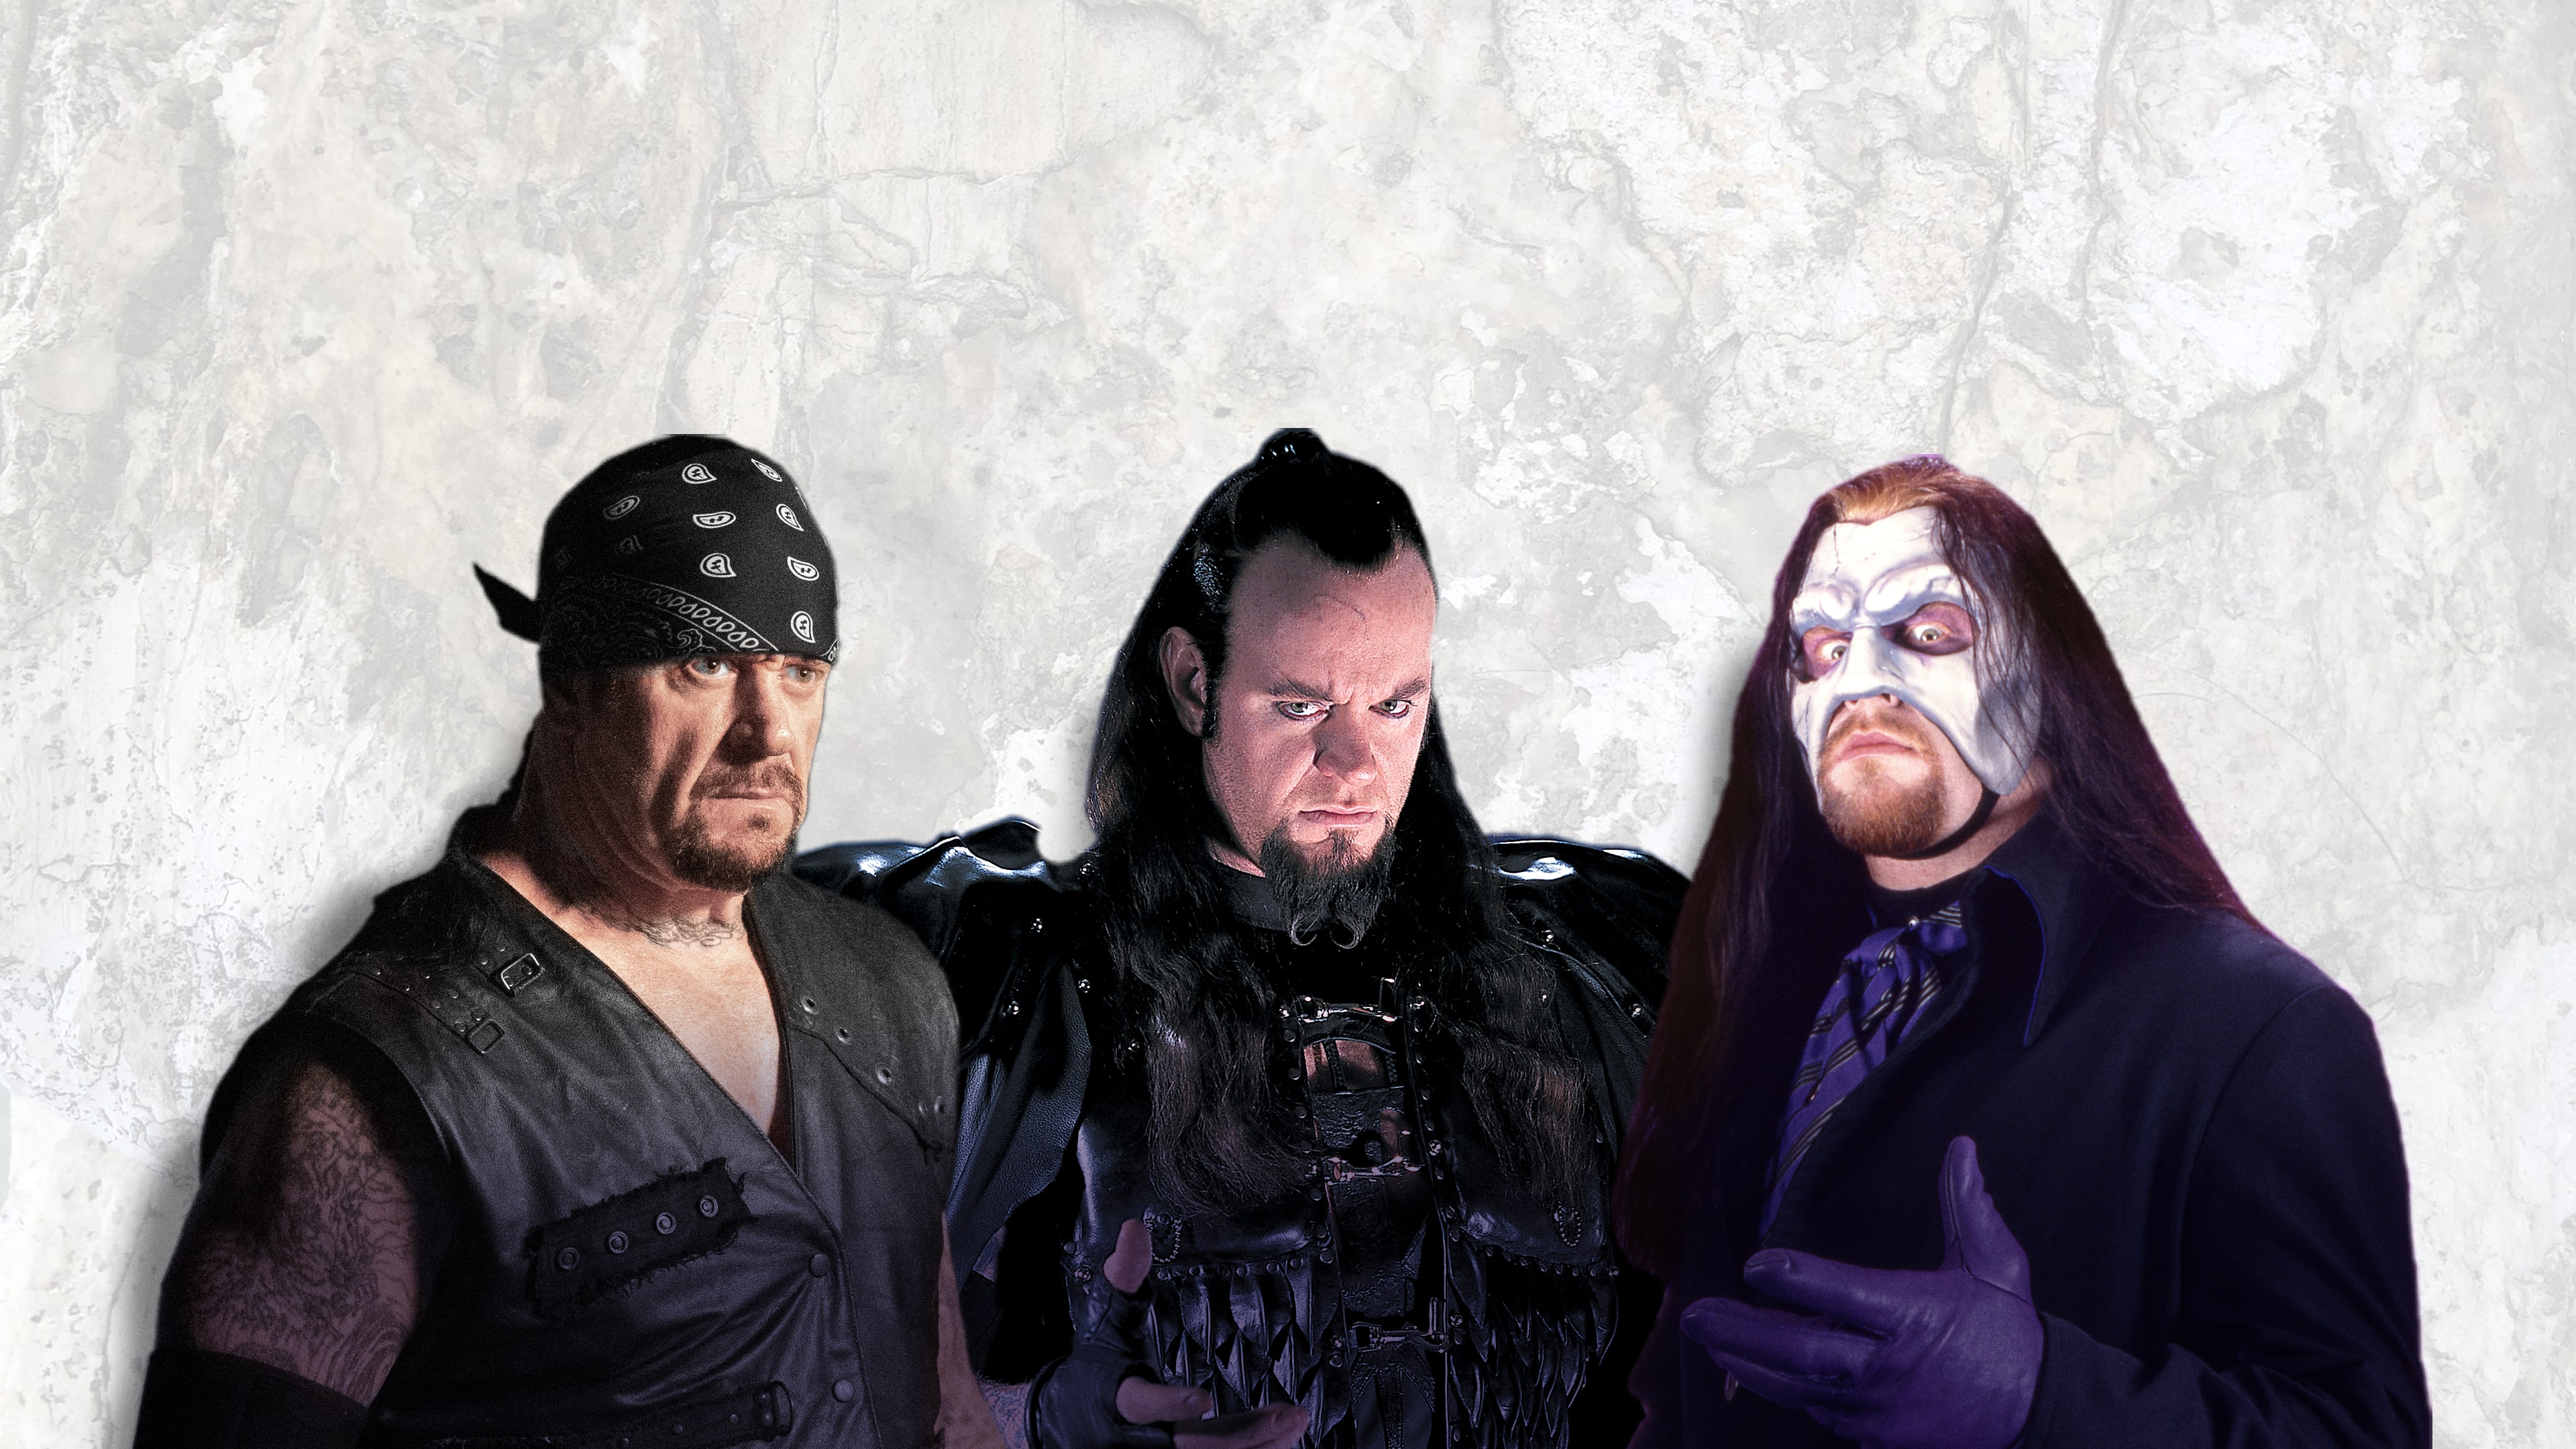 wwe the undertaker mask